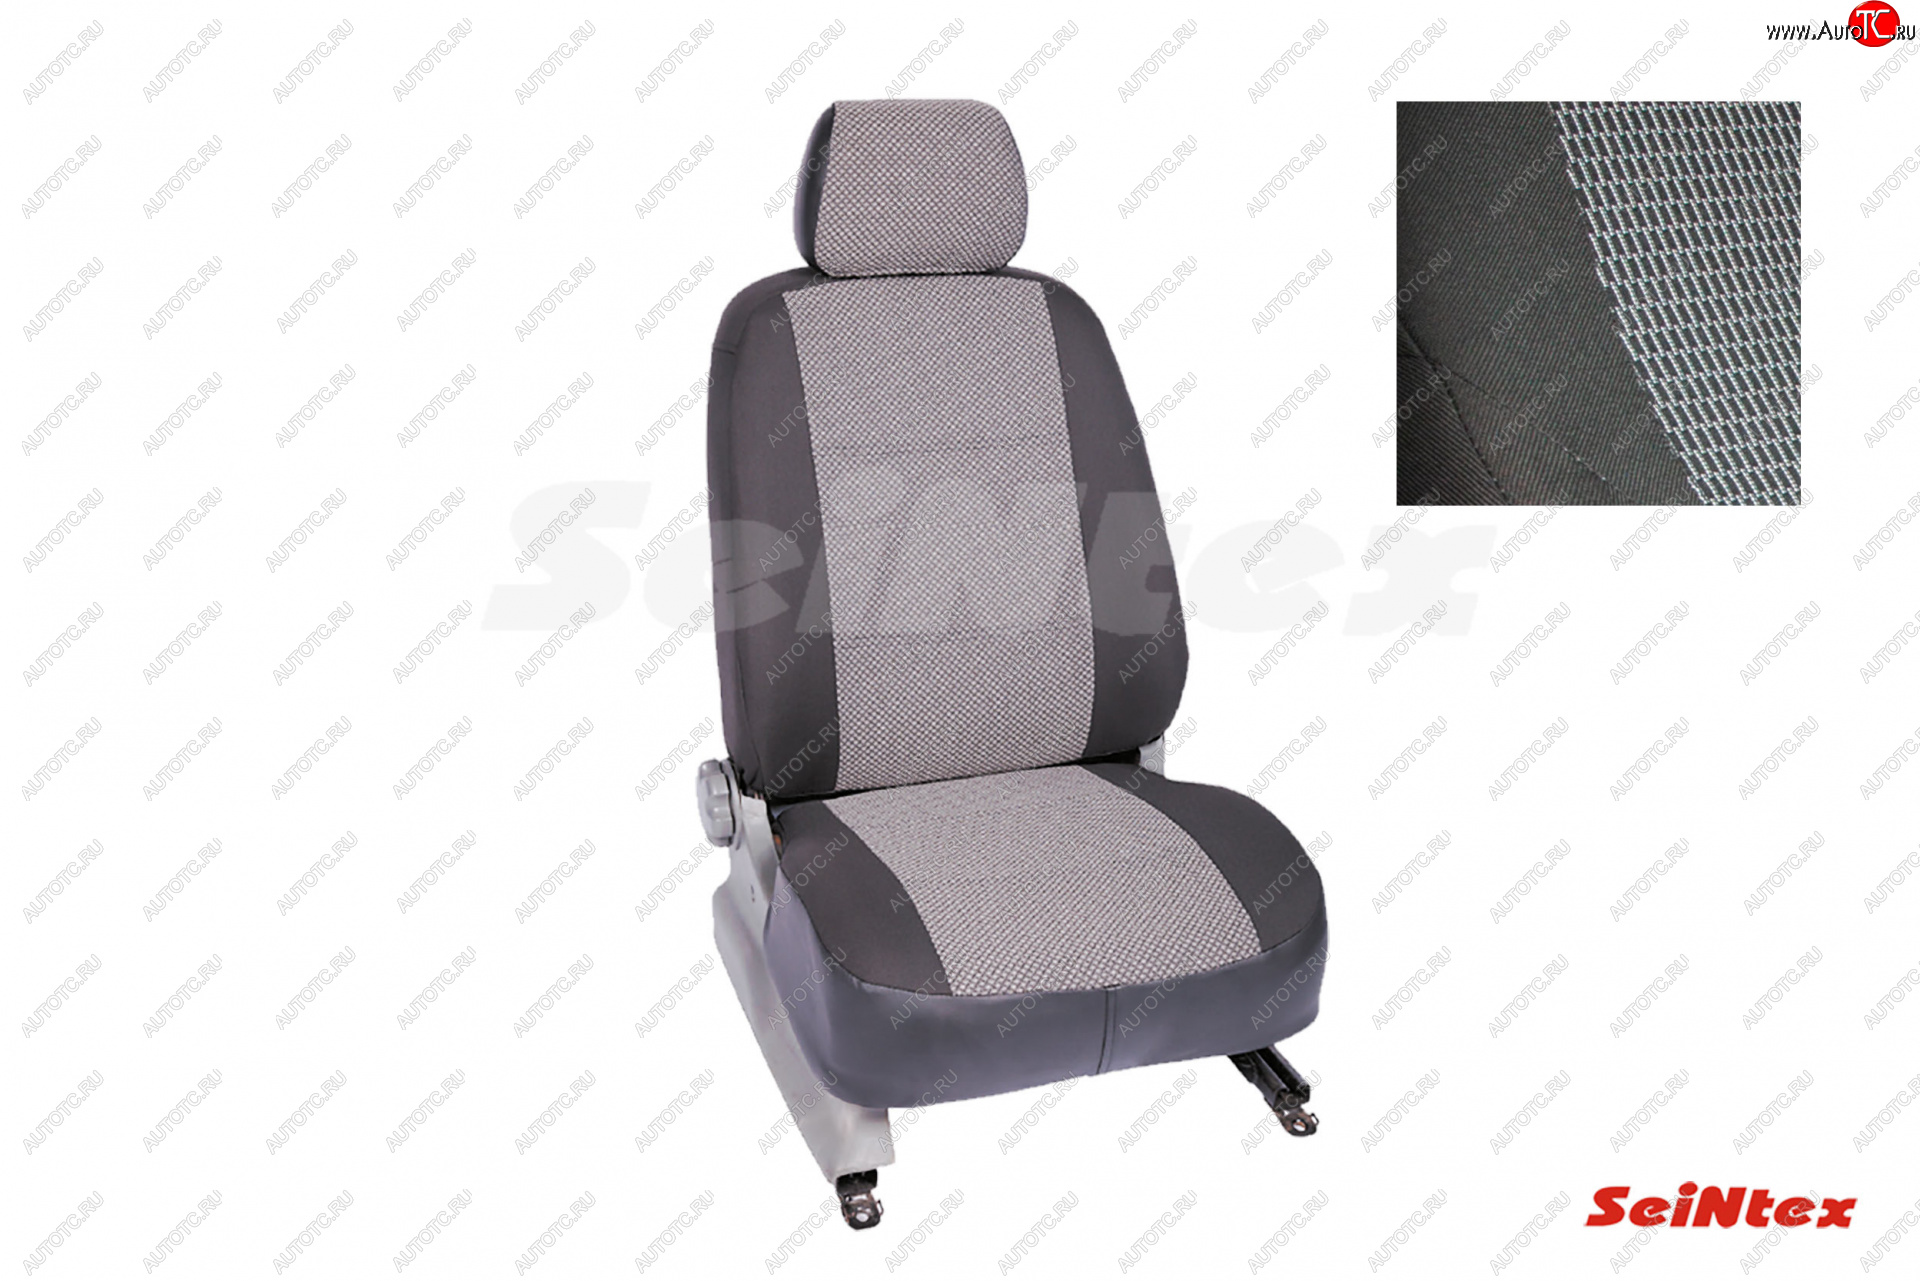 4 599 р. Чехлы для сидений на Seintex (жаккард)  Nissan X-trail  1 T30 (2000-2003)  с доставкой в г. Калуга